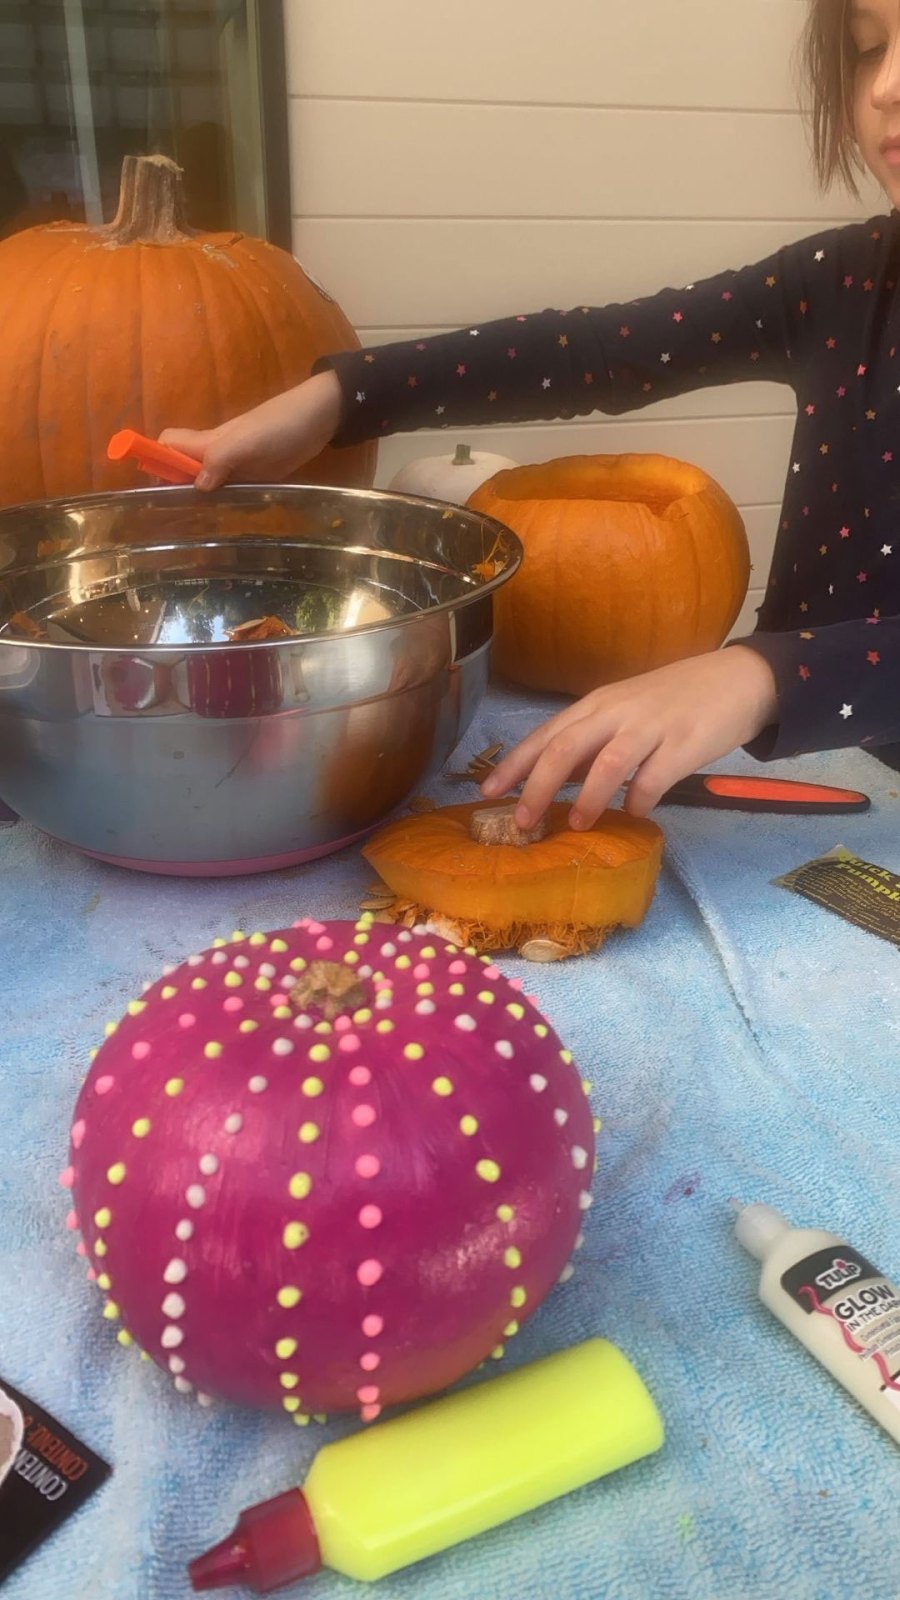 Jenna Dewan Celebrity Parents Carving Pumpkins With Their Kids